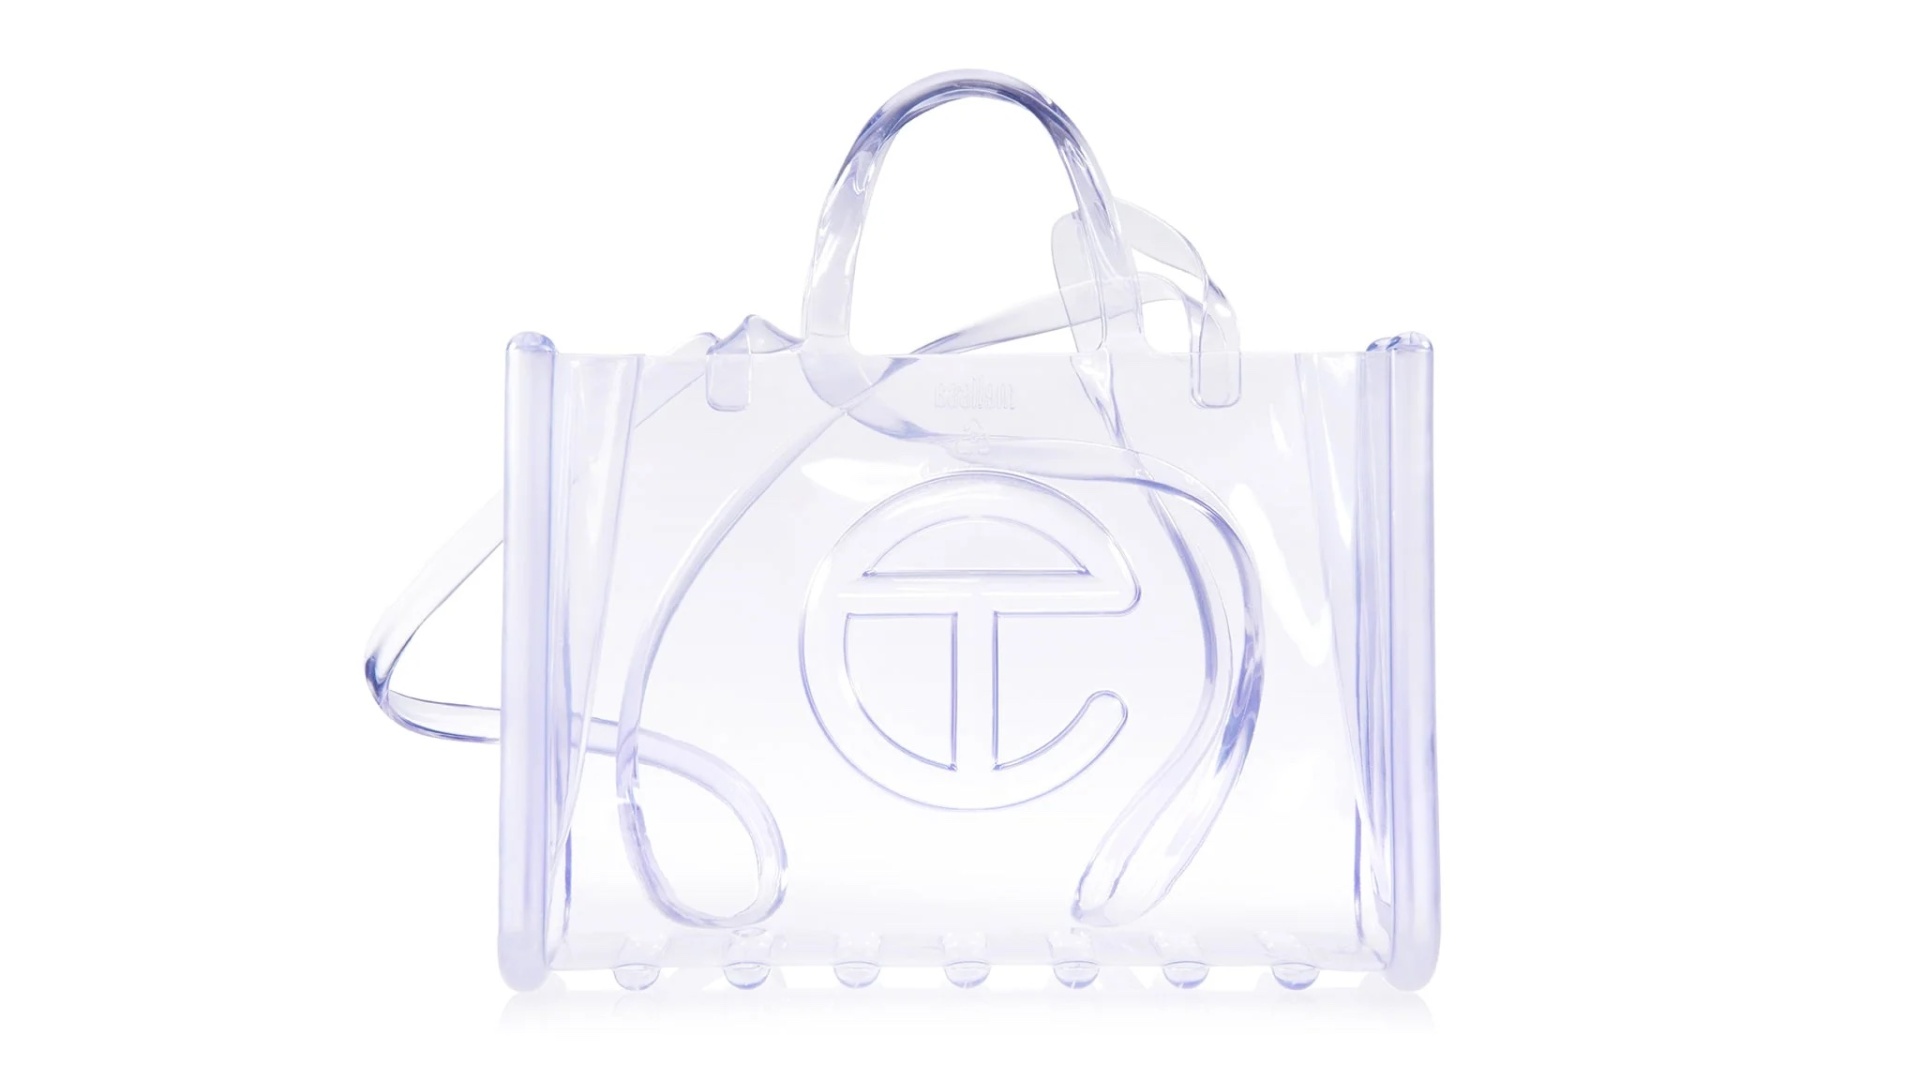 Louis Vuitton Clear Plastic Tote Bag